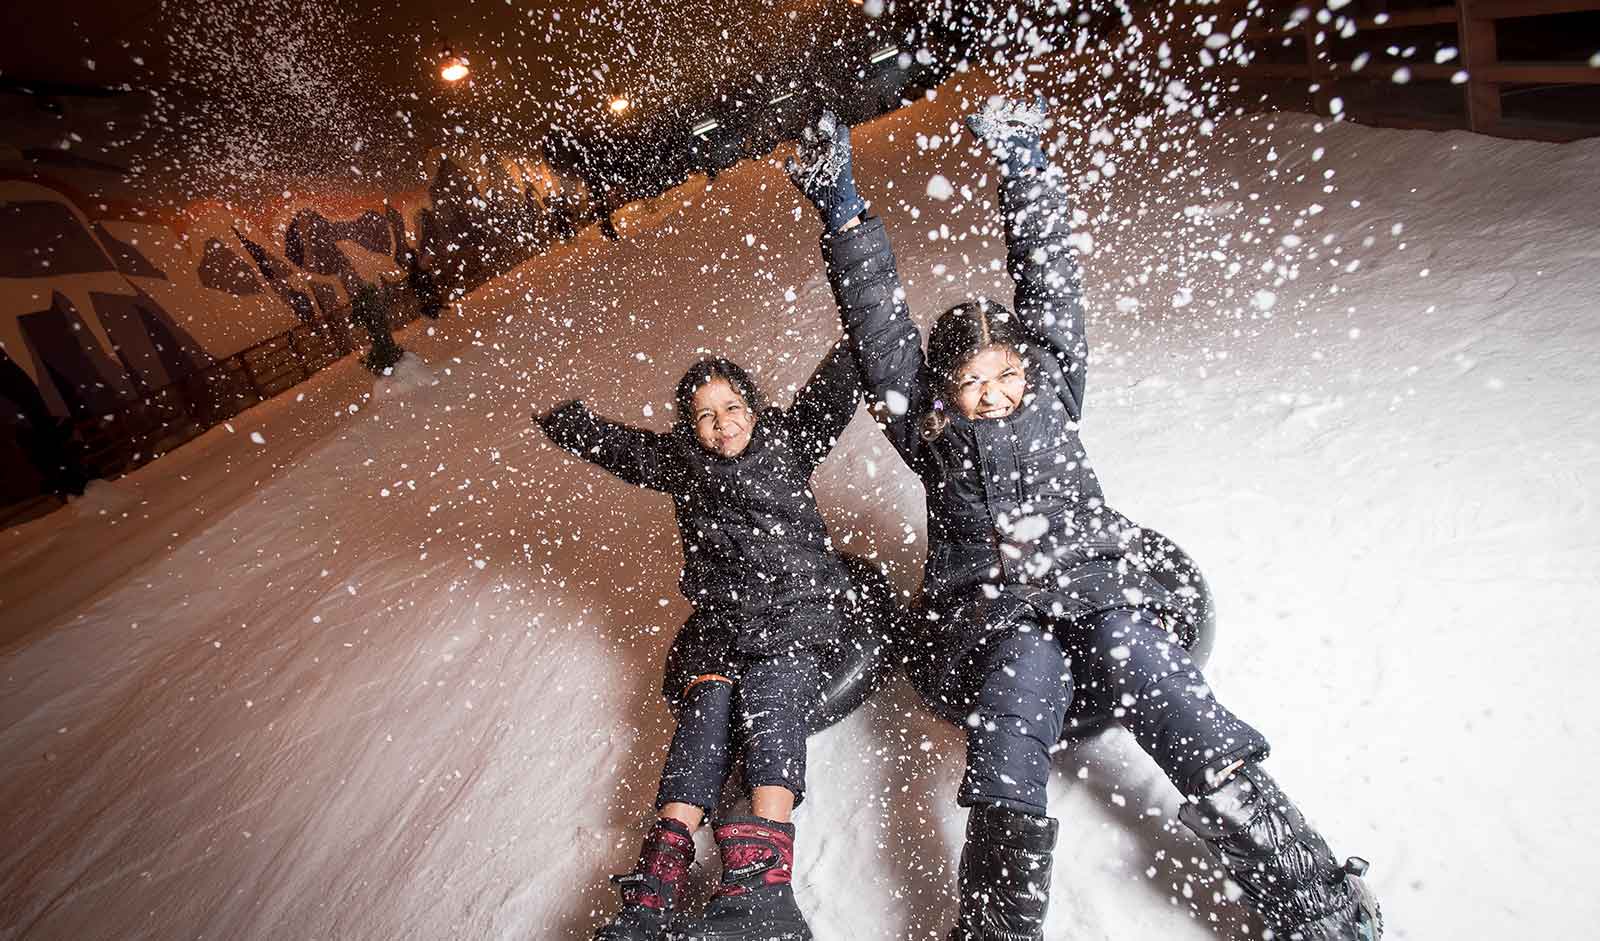 Experience winter at Snow City-Indoor snow playground